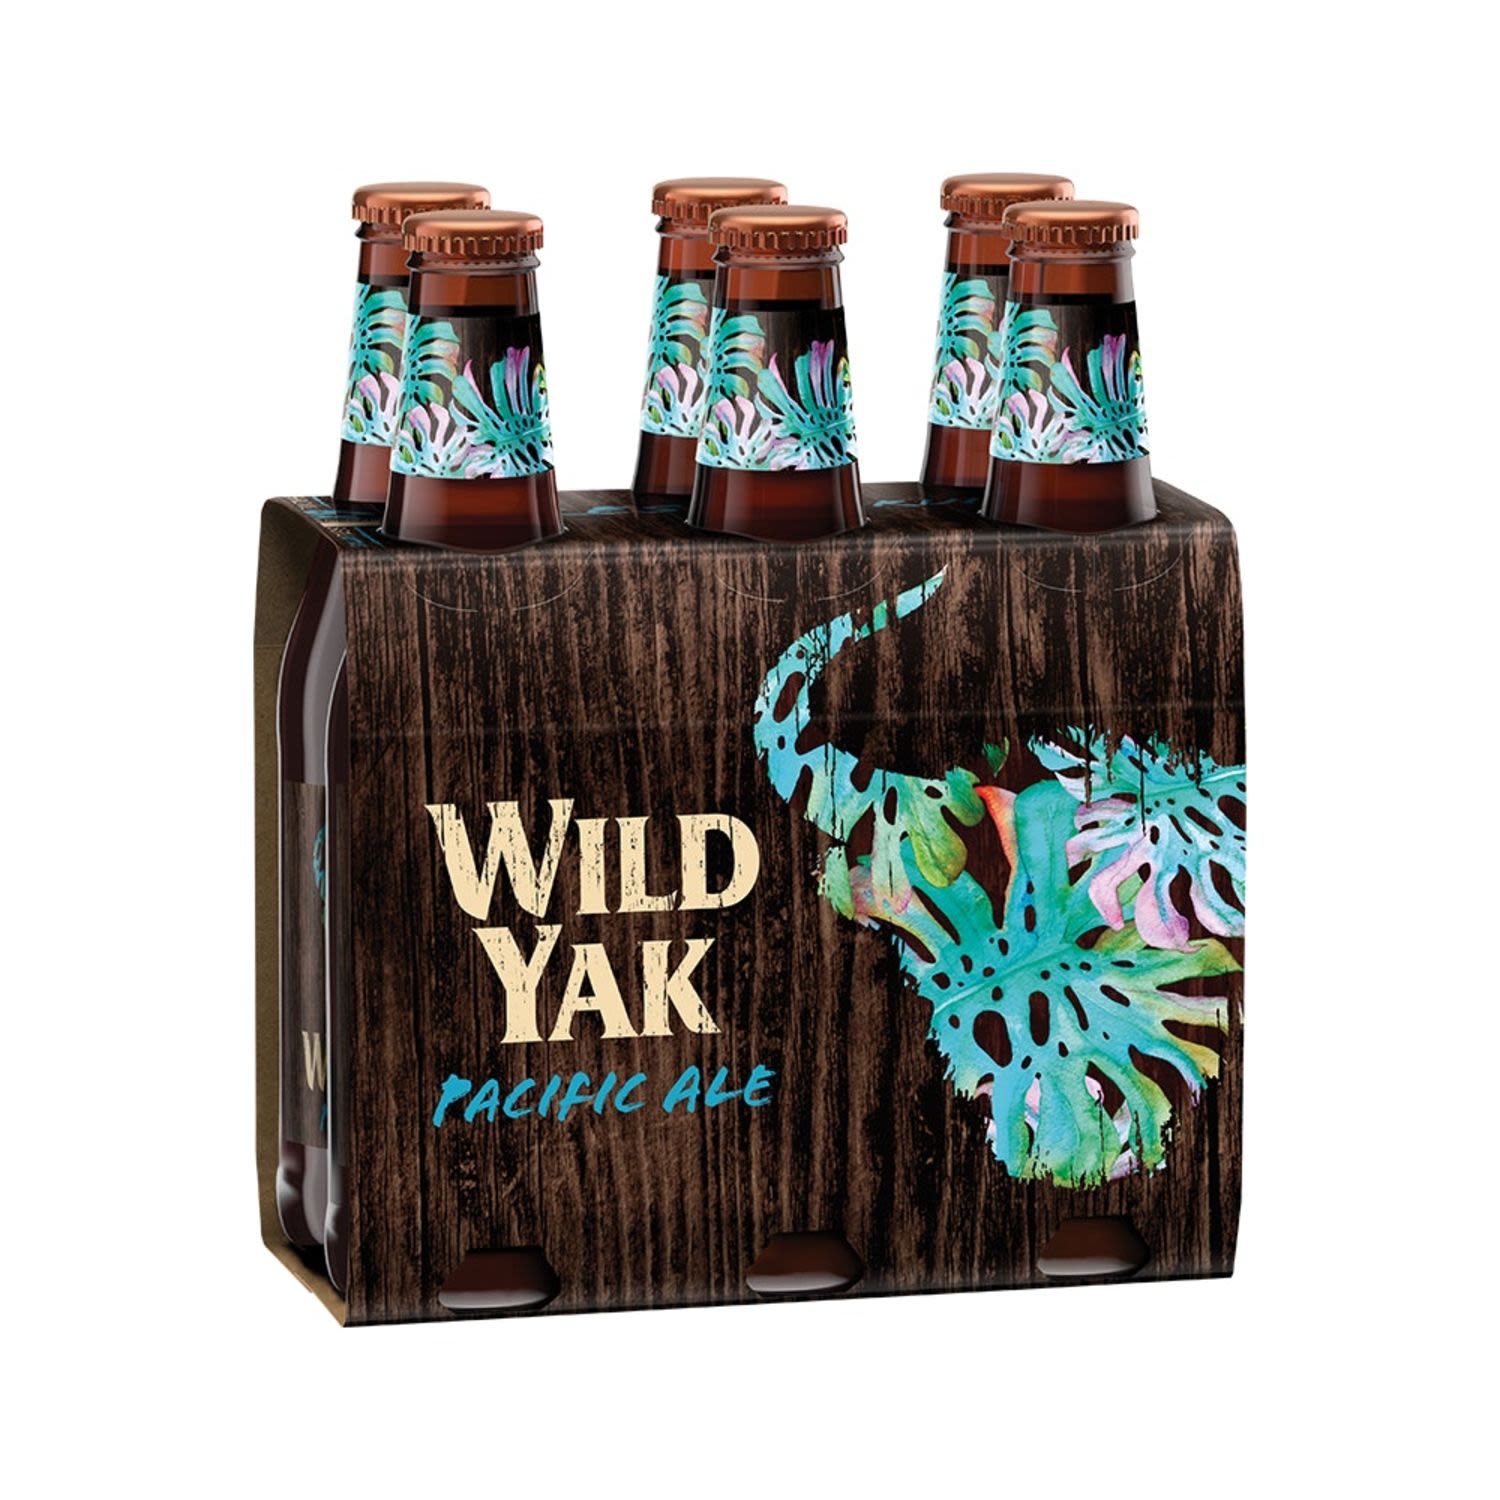 Yak Ales Wild Yak Pacific Ale Bottle 345mL 6 Pack